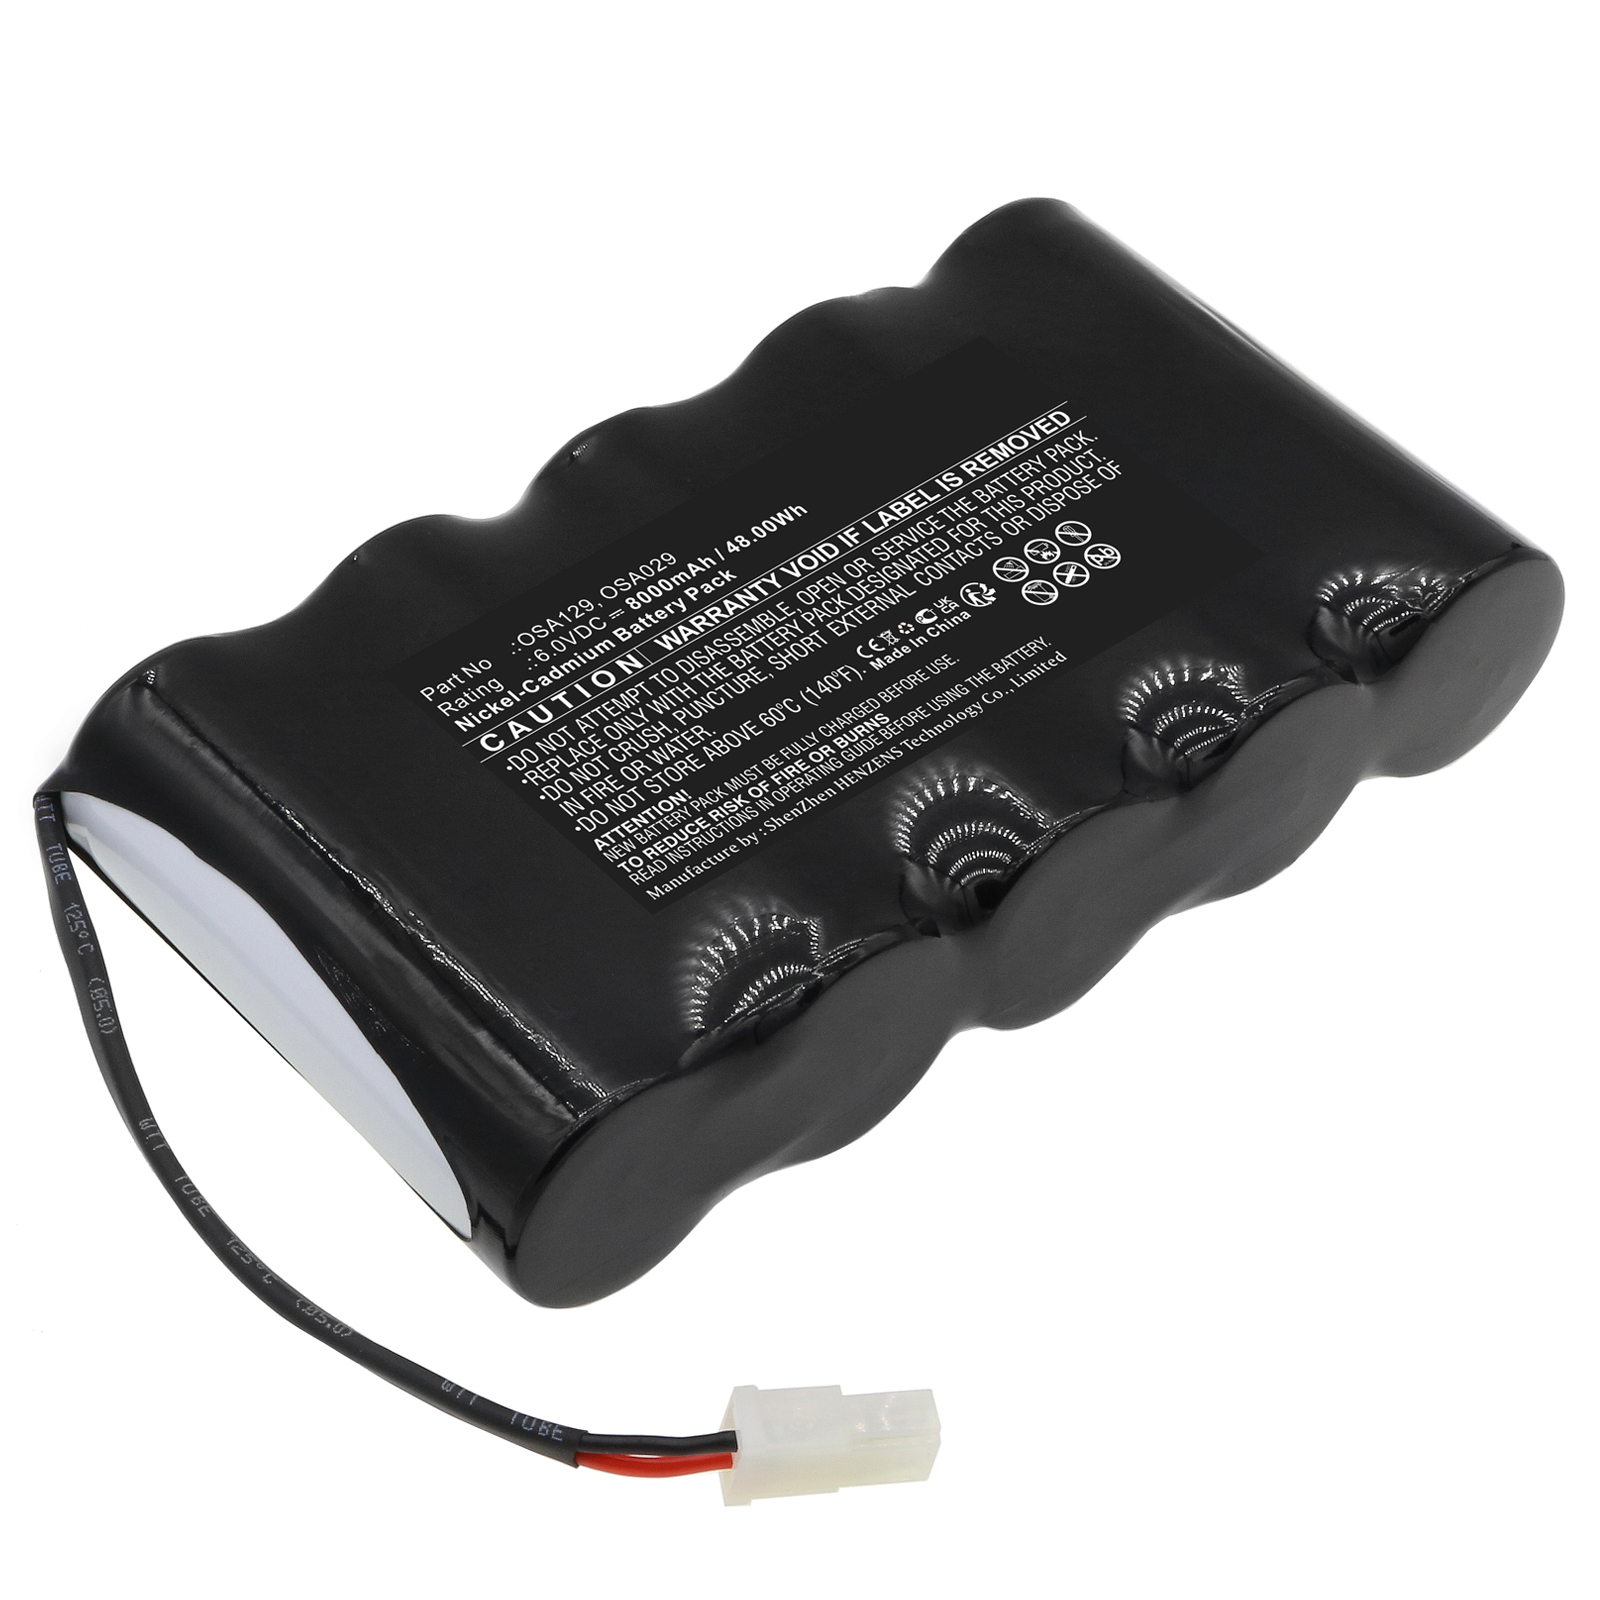 Synergy Digital Emergency Lighting Battery, Compatible with PowerSonic OSA029 Emergency Lighting Battery (Ni-CD, 6V, 8000mAh)